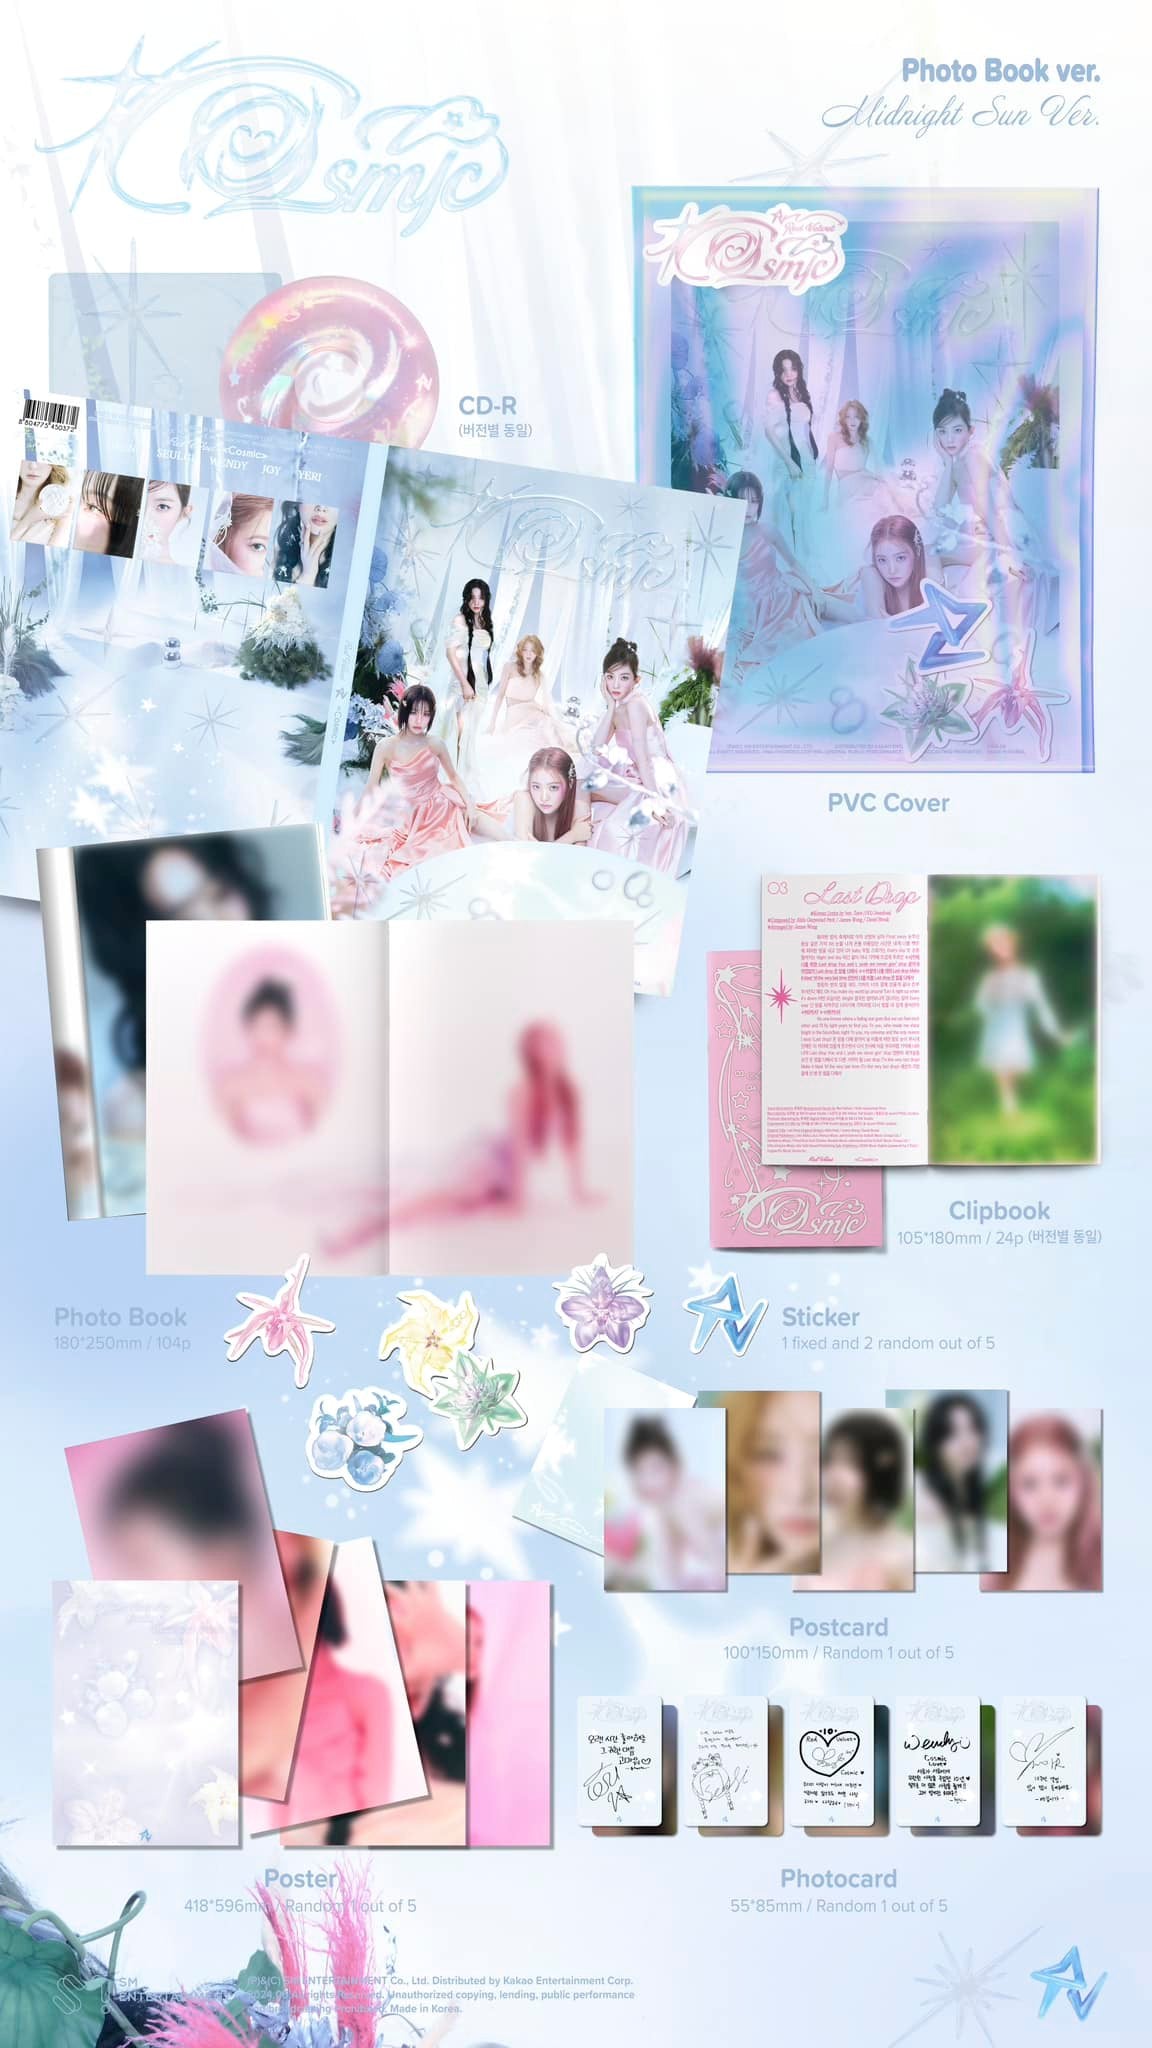 Red Velvet [ Cosmic ] - (Photobook, Postcard, Smini Versions)